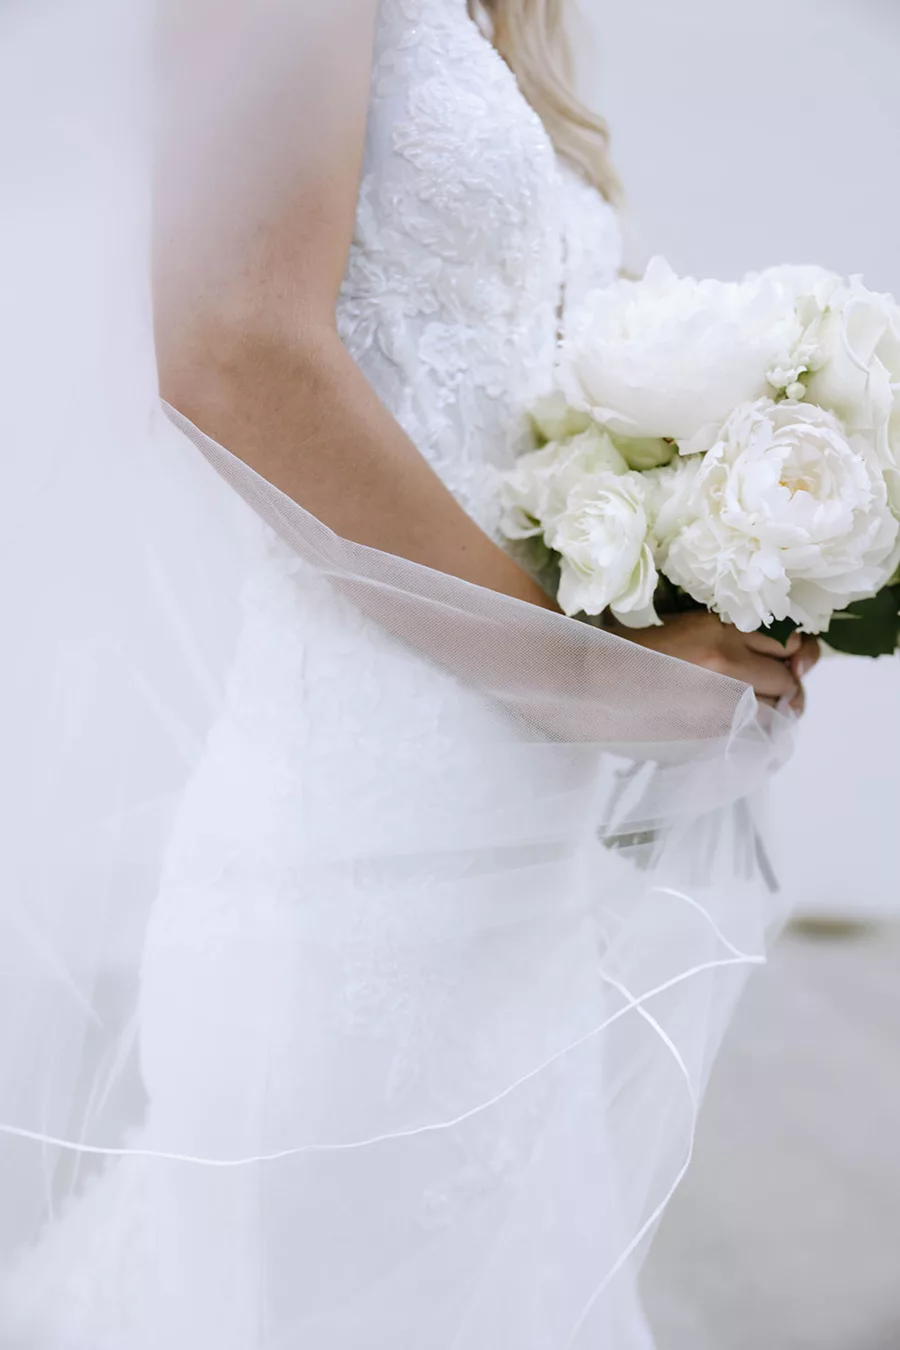 White Rose and Peony Wedding Bouquet Inspiration | Tampa Bay Florist Bloom Shakalaka